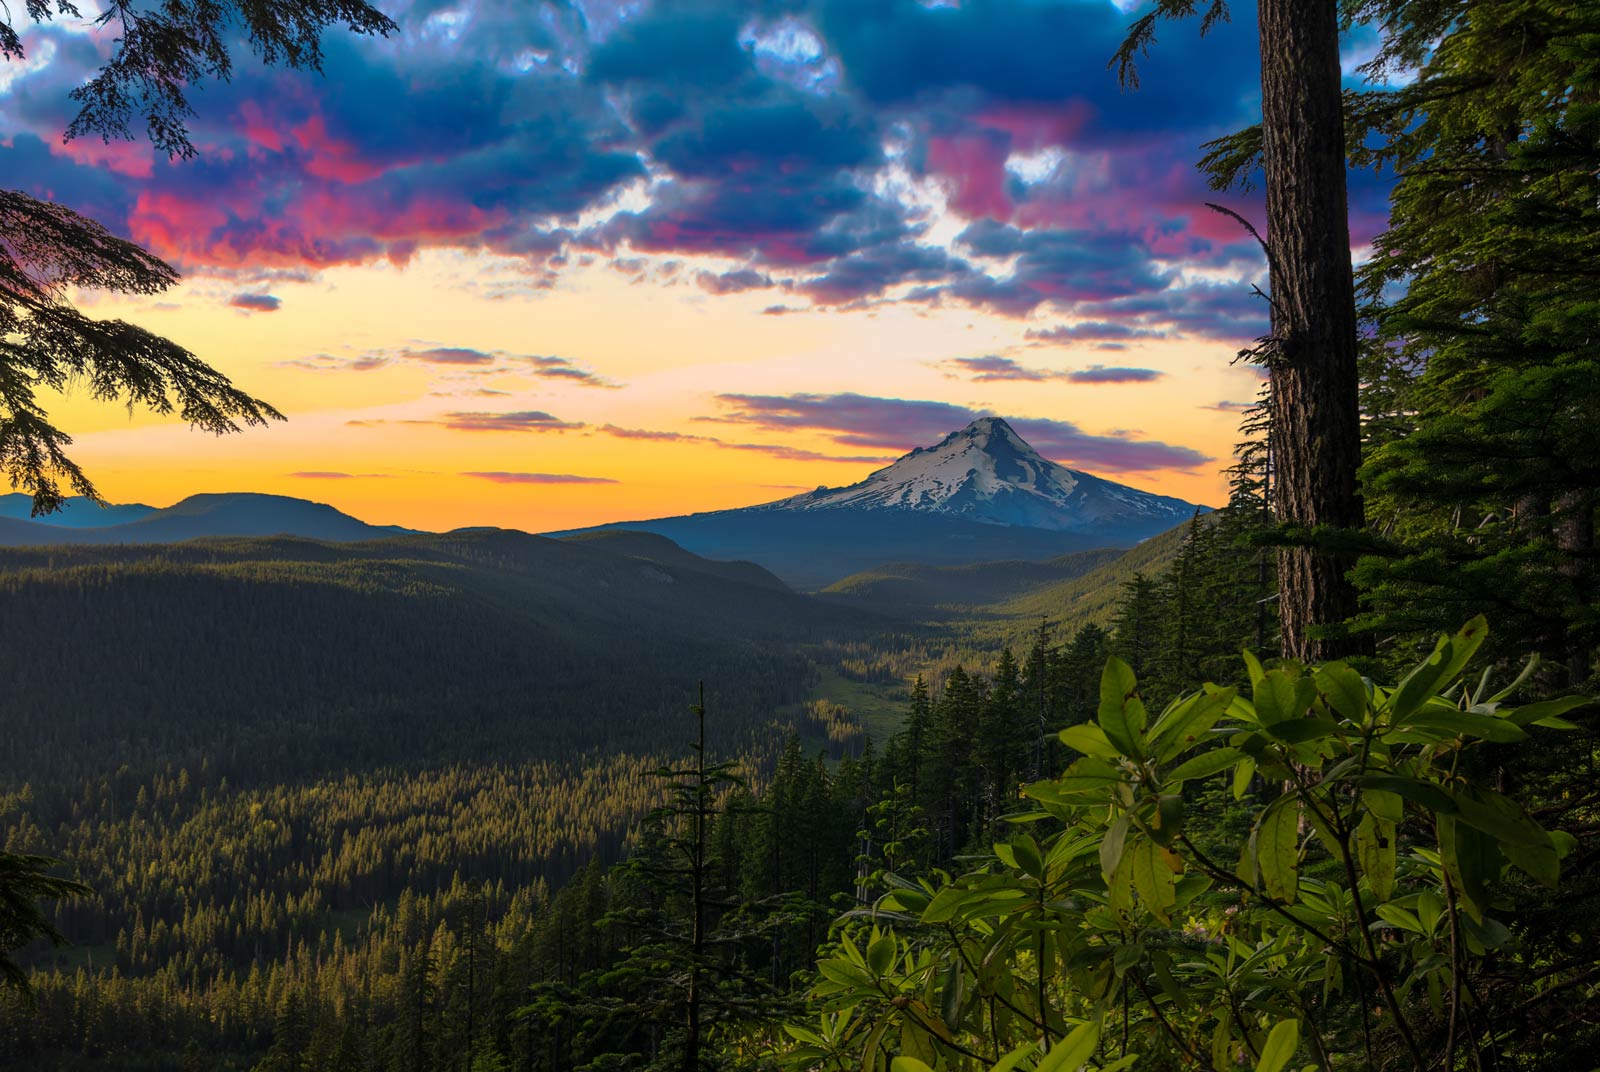 Mount Hood National Forest in Oregon